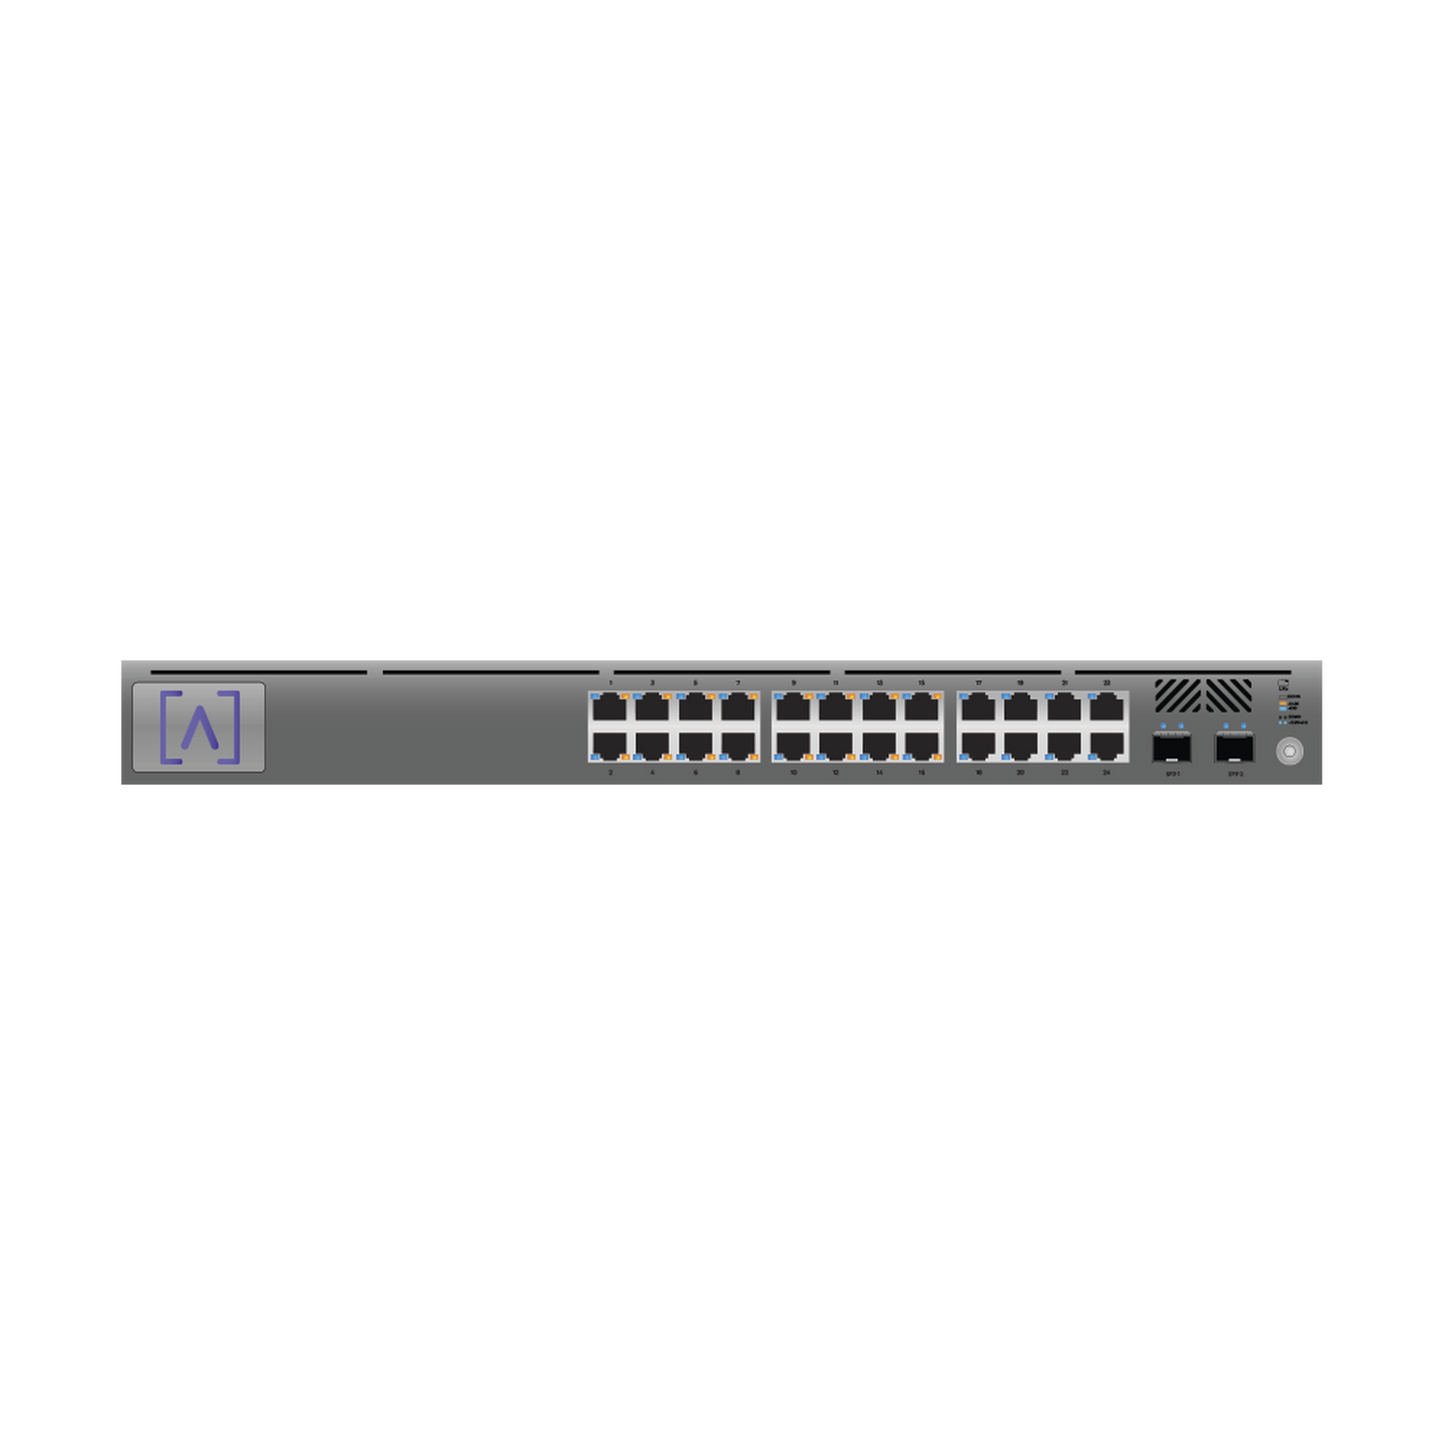 Managed Gigabit PoE+ Switch / 24 ports 10/100/1000 Mbps + 2 SFP Uplink Ports / Up to 240W / Alta Labs Cloud.